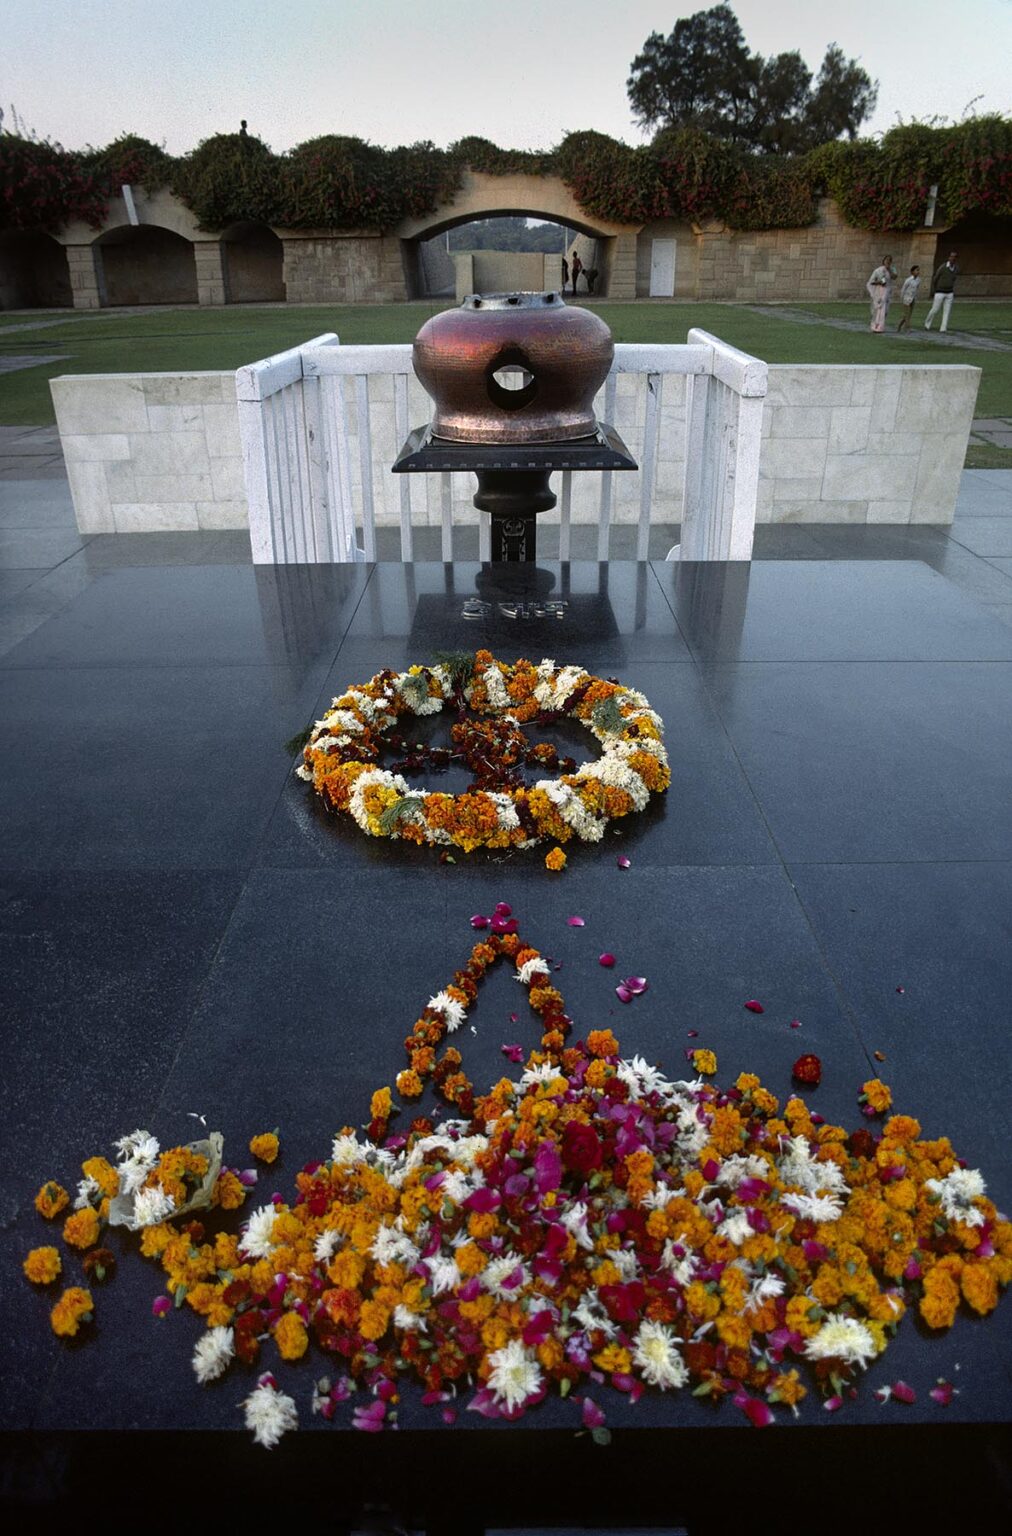 FLOWERS at RAJ GHAT, the cremation site of Mahatma GANDHI, J. Nehru, and Indira Gandhi - DELHI, INDIA